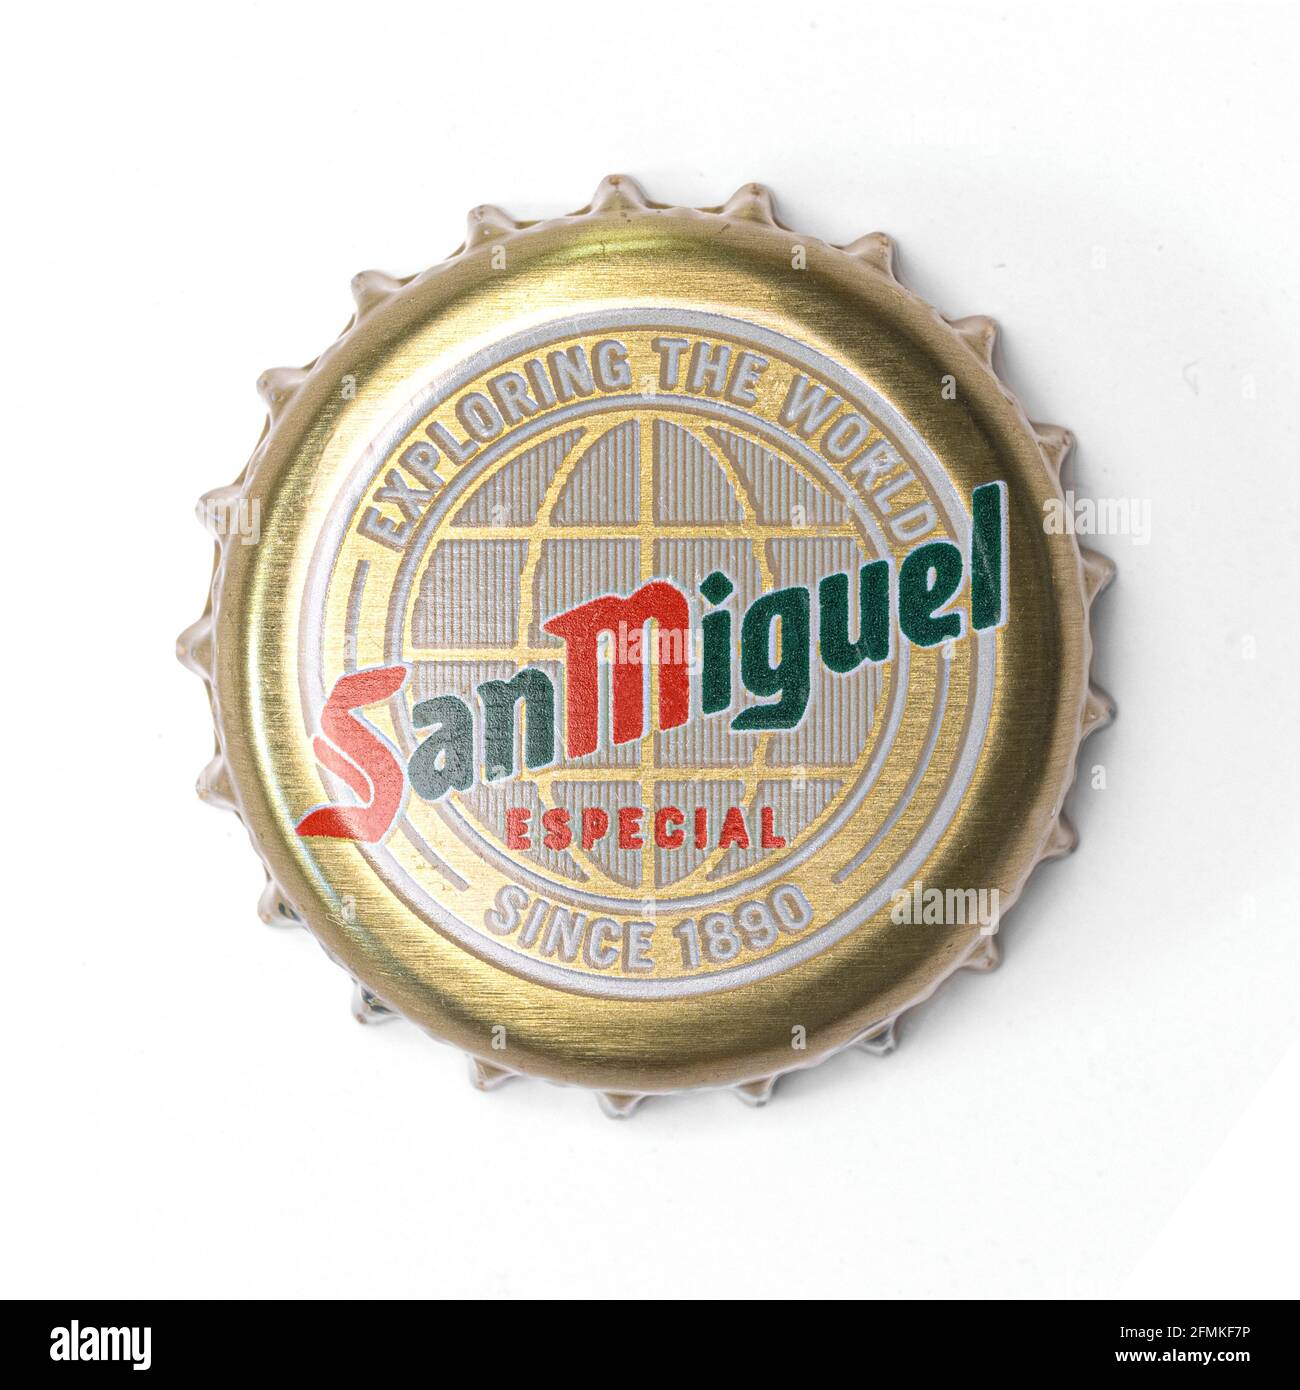 Cervecería Bavaria Poker Club Beer Bottle Top Crown Caps Used Lager Spain 